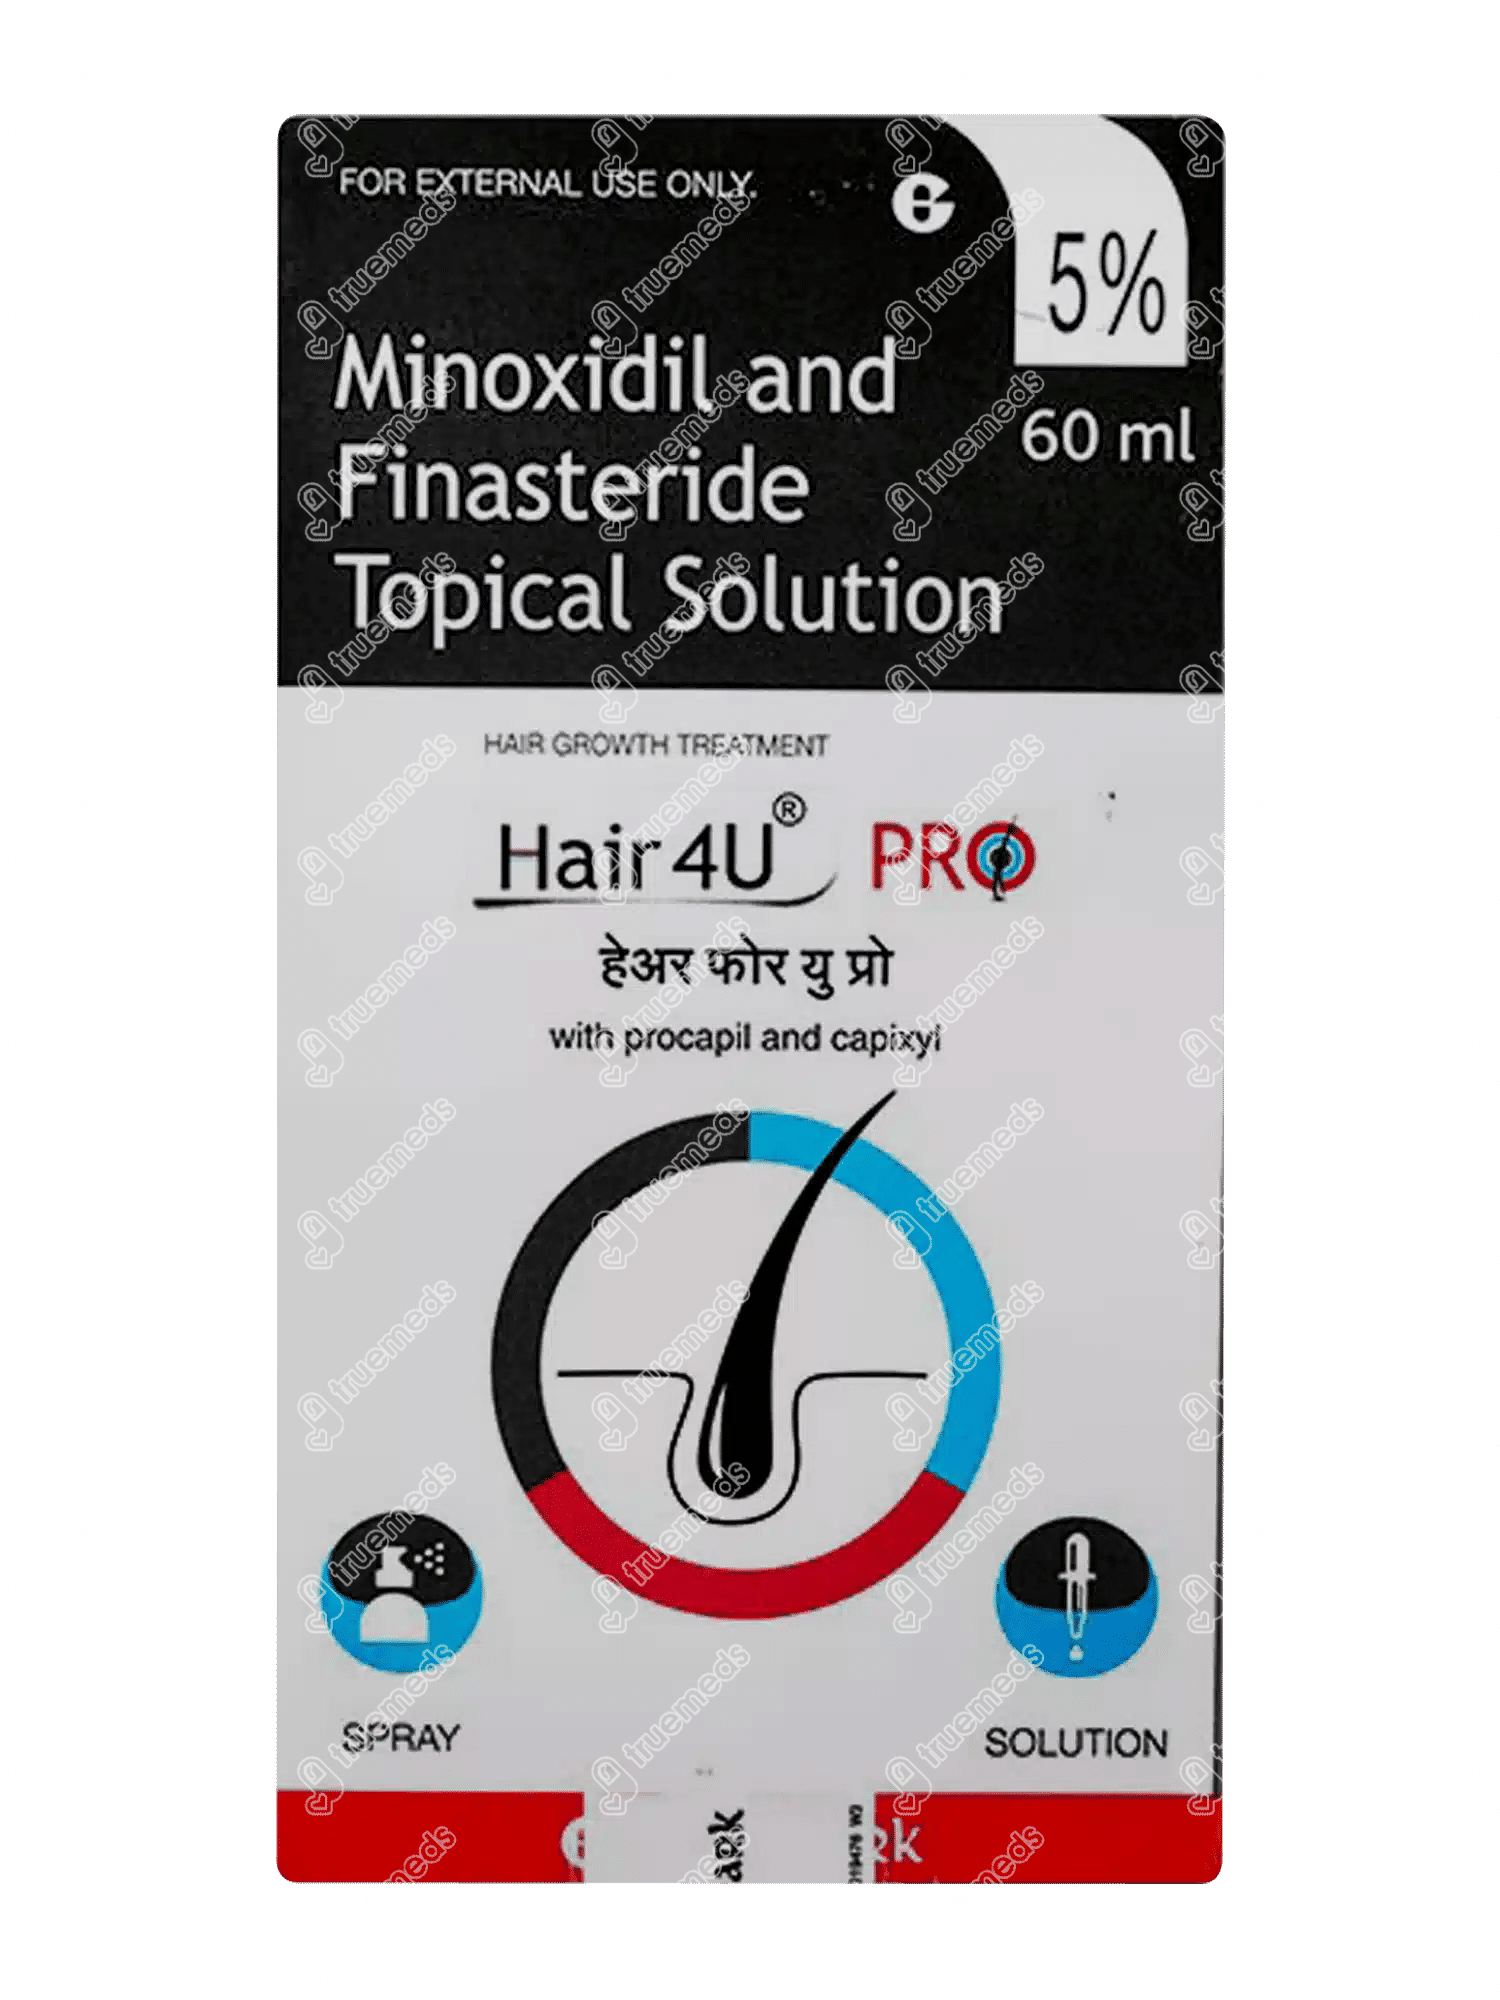 Buy Hair4u 5 Lotion 60ml from Glenmark Pharmaceuticals Ltd in India